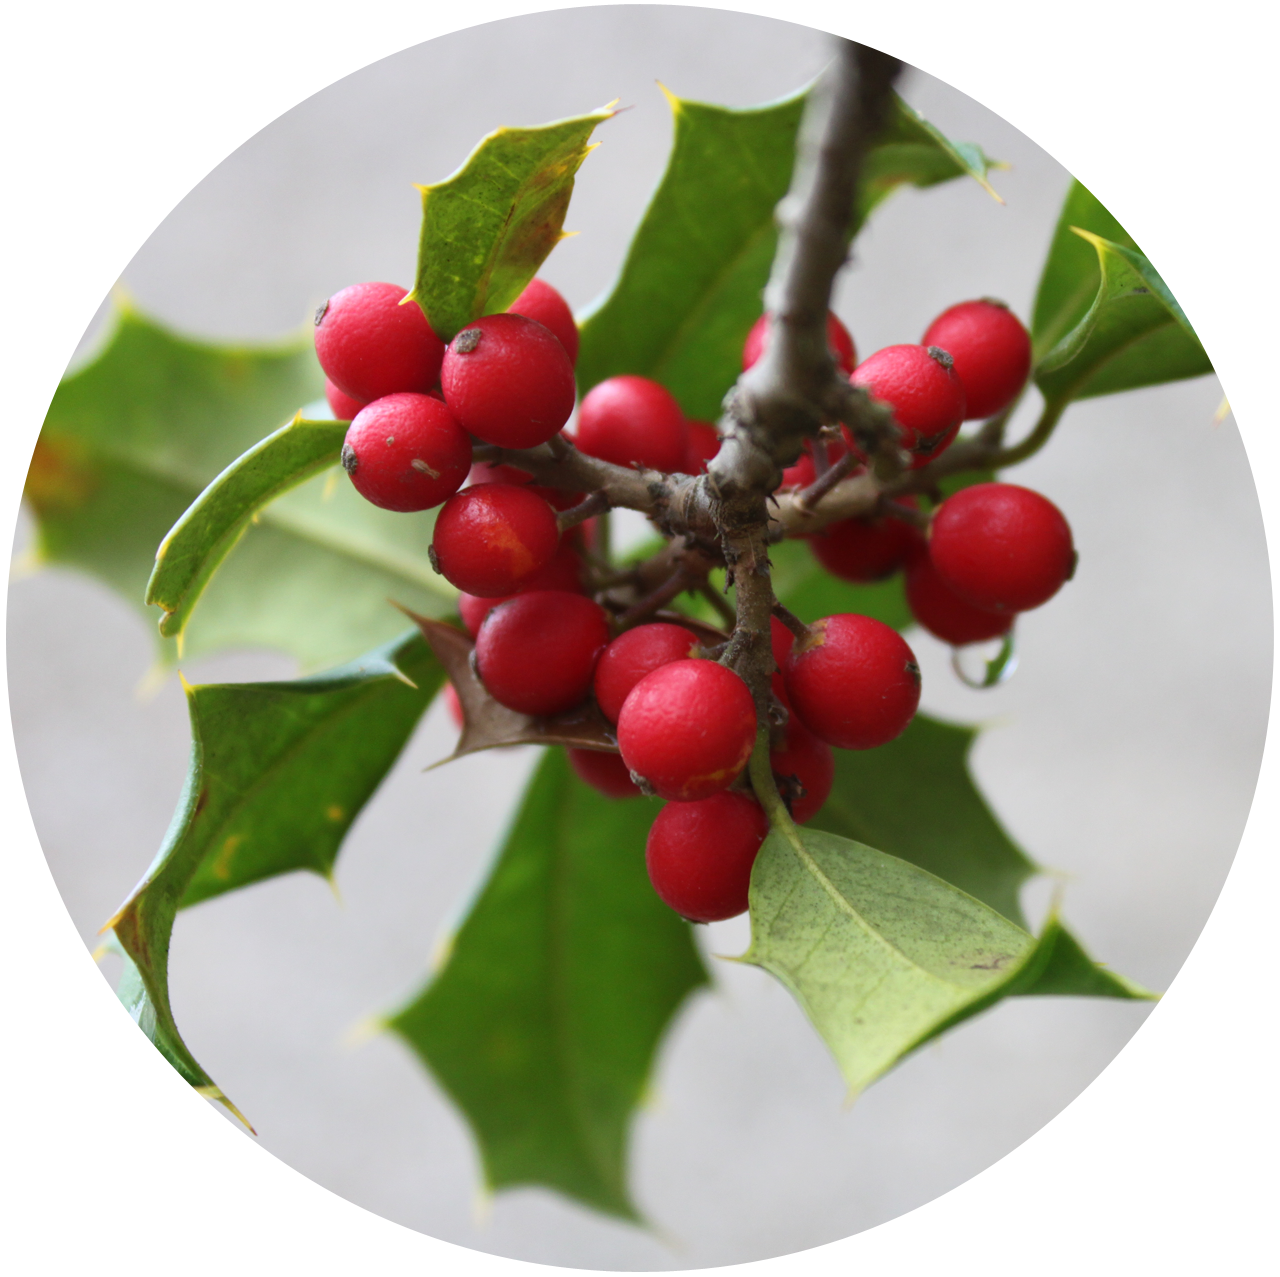 English holly, Ilex aquifolium. Red berries with evergreen leaves.